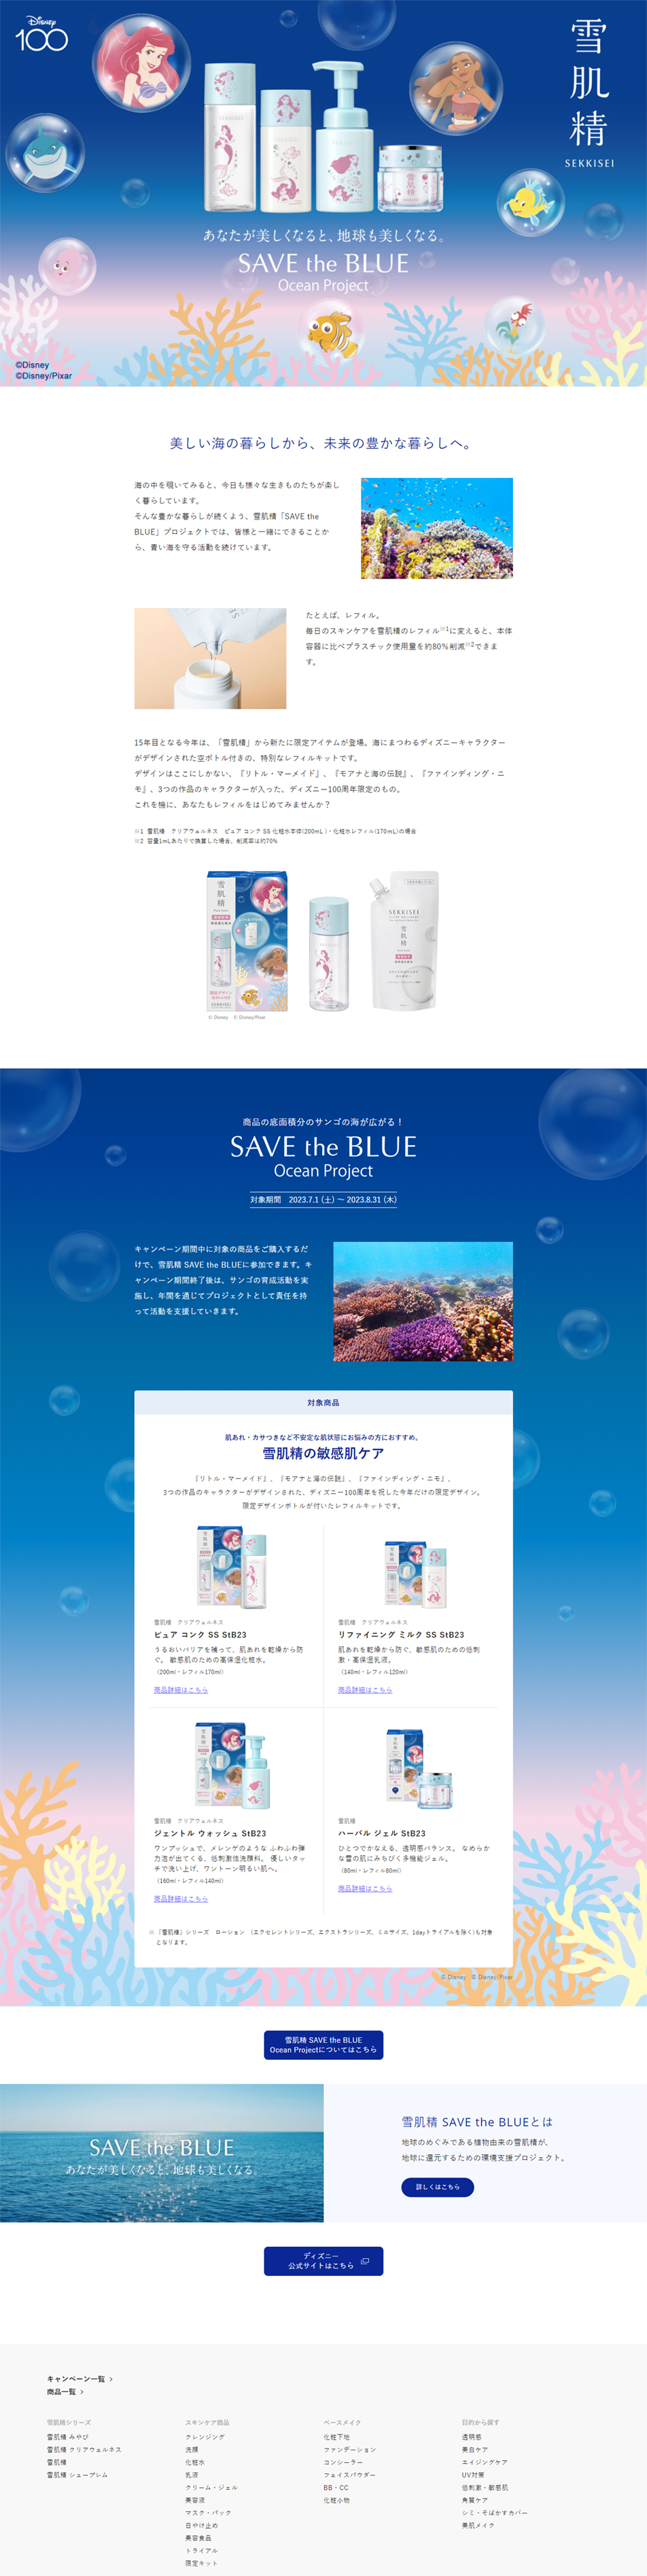 雪肌精 SAVE the BLUE_pc_1